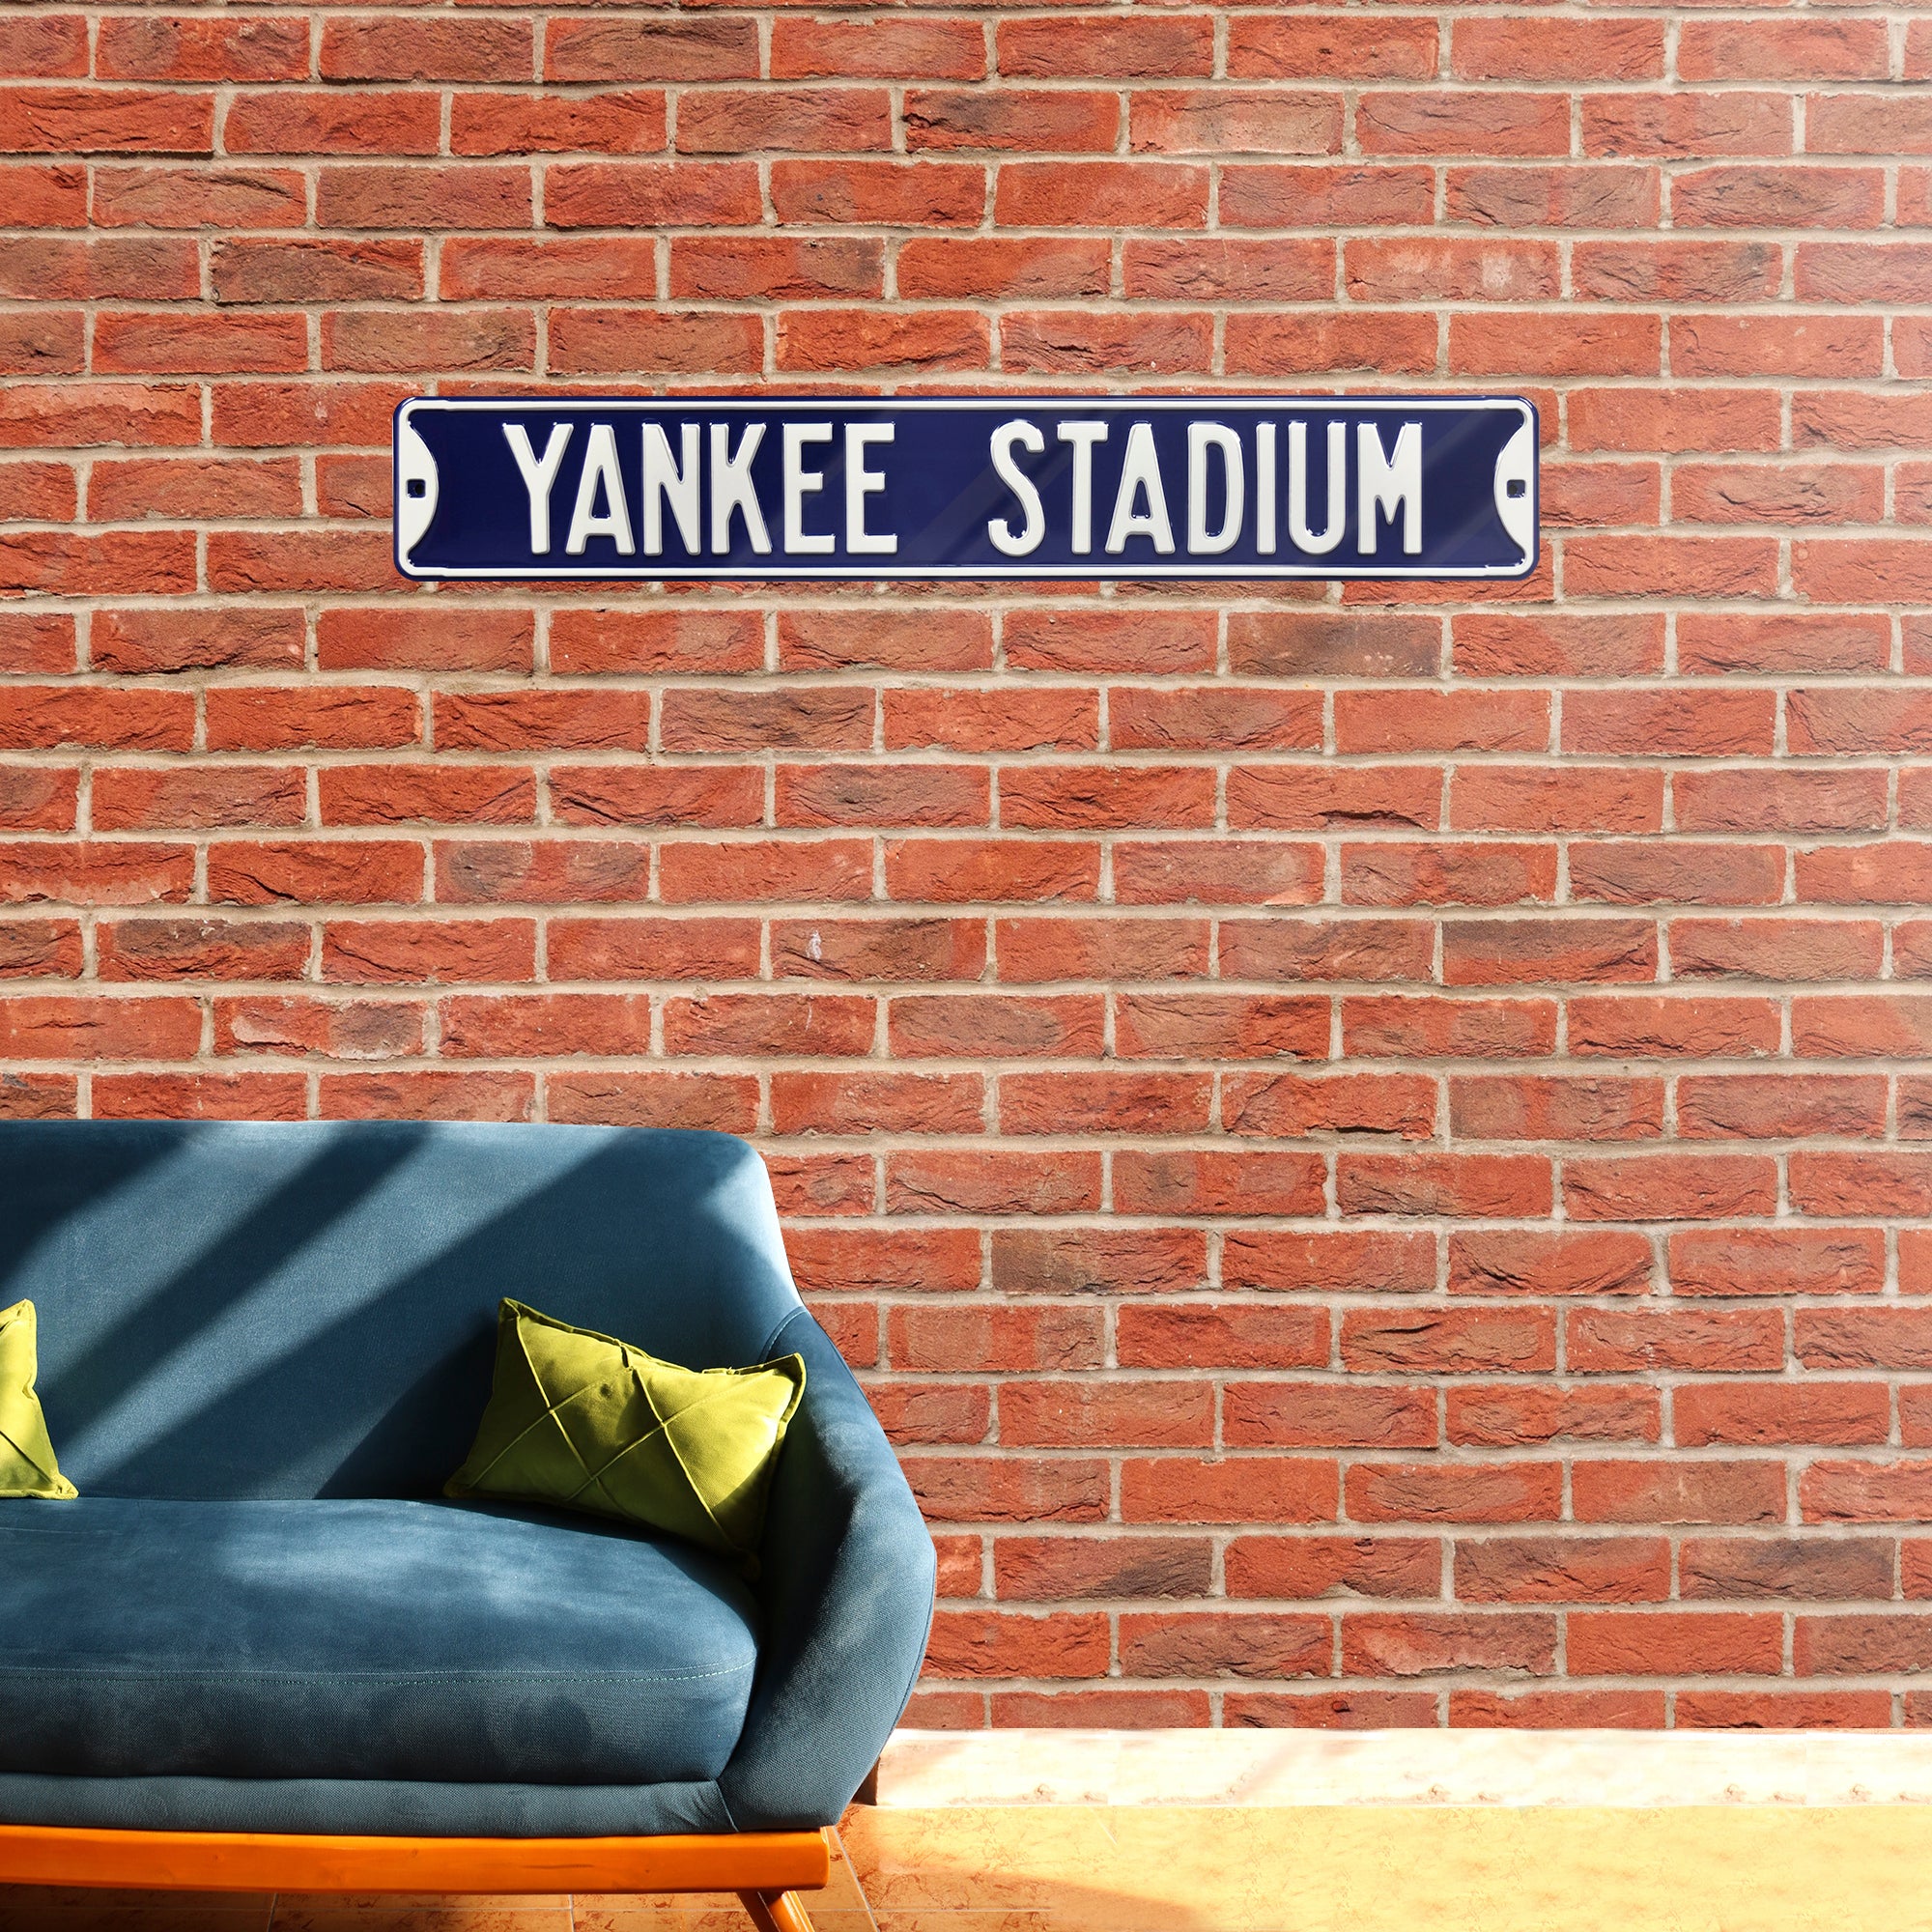 New York Yankees Steel Street Sign-YANKEE STADIUM 36" W x 6" H by Fathead